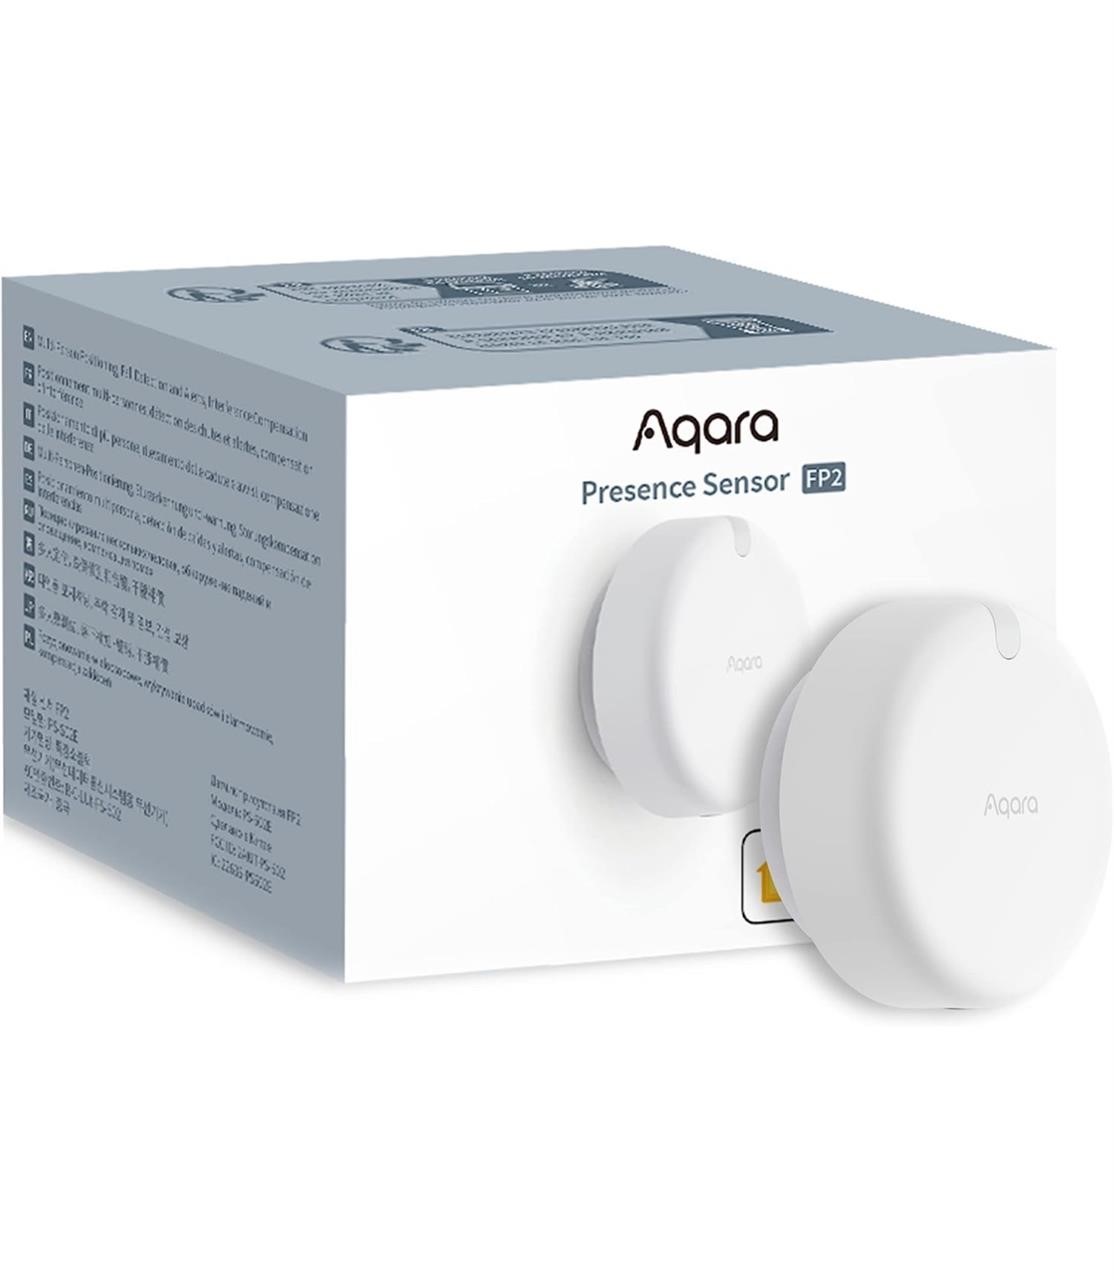 $110 Aqara Presence Sensor FP2, 2.4 GHz Wi-Fi